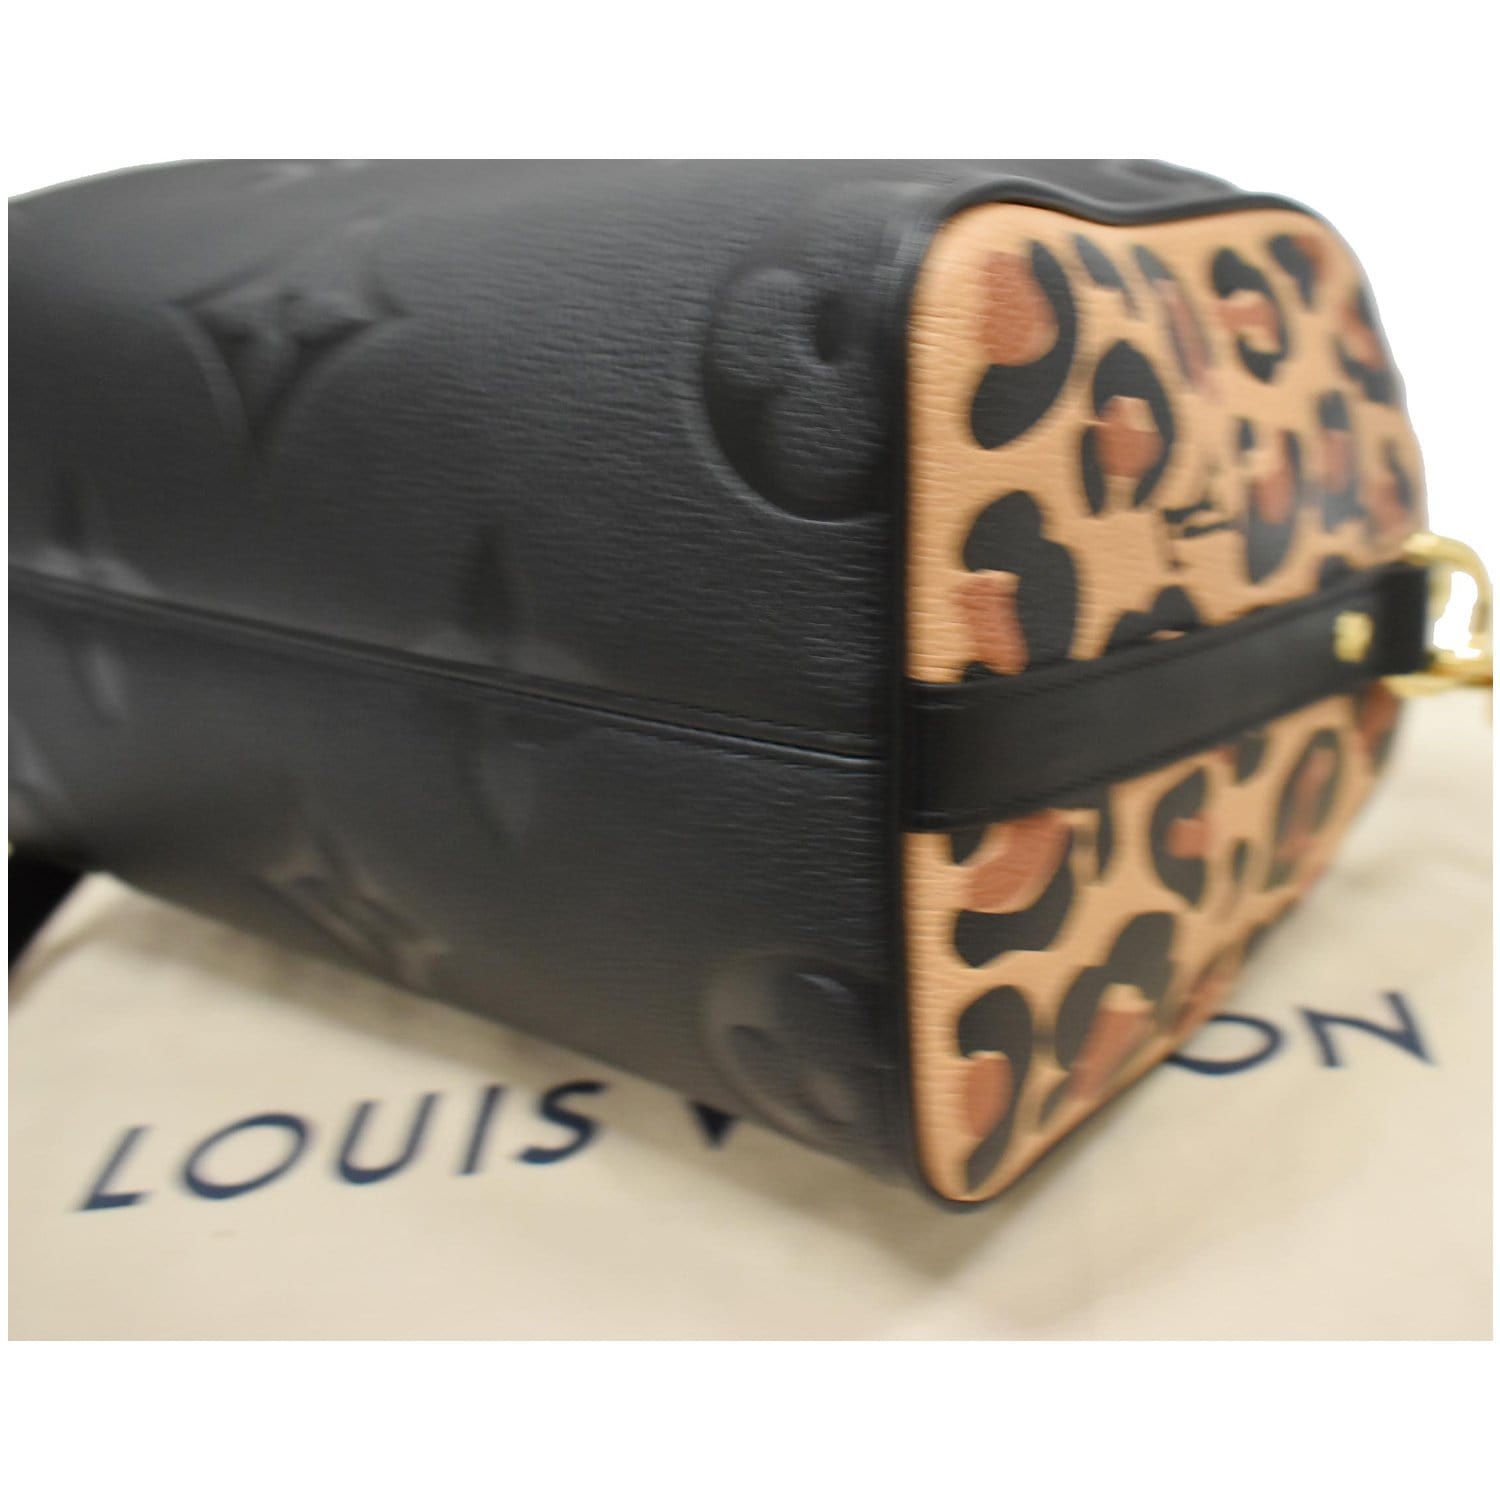 Louis Vuitton Wild At Heart Speedy 25 Bandouliere - LVLENKA Luxury